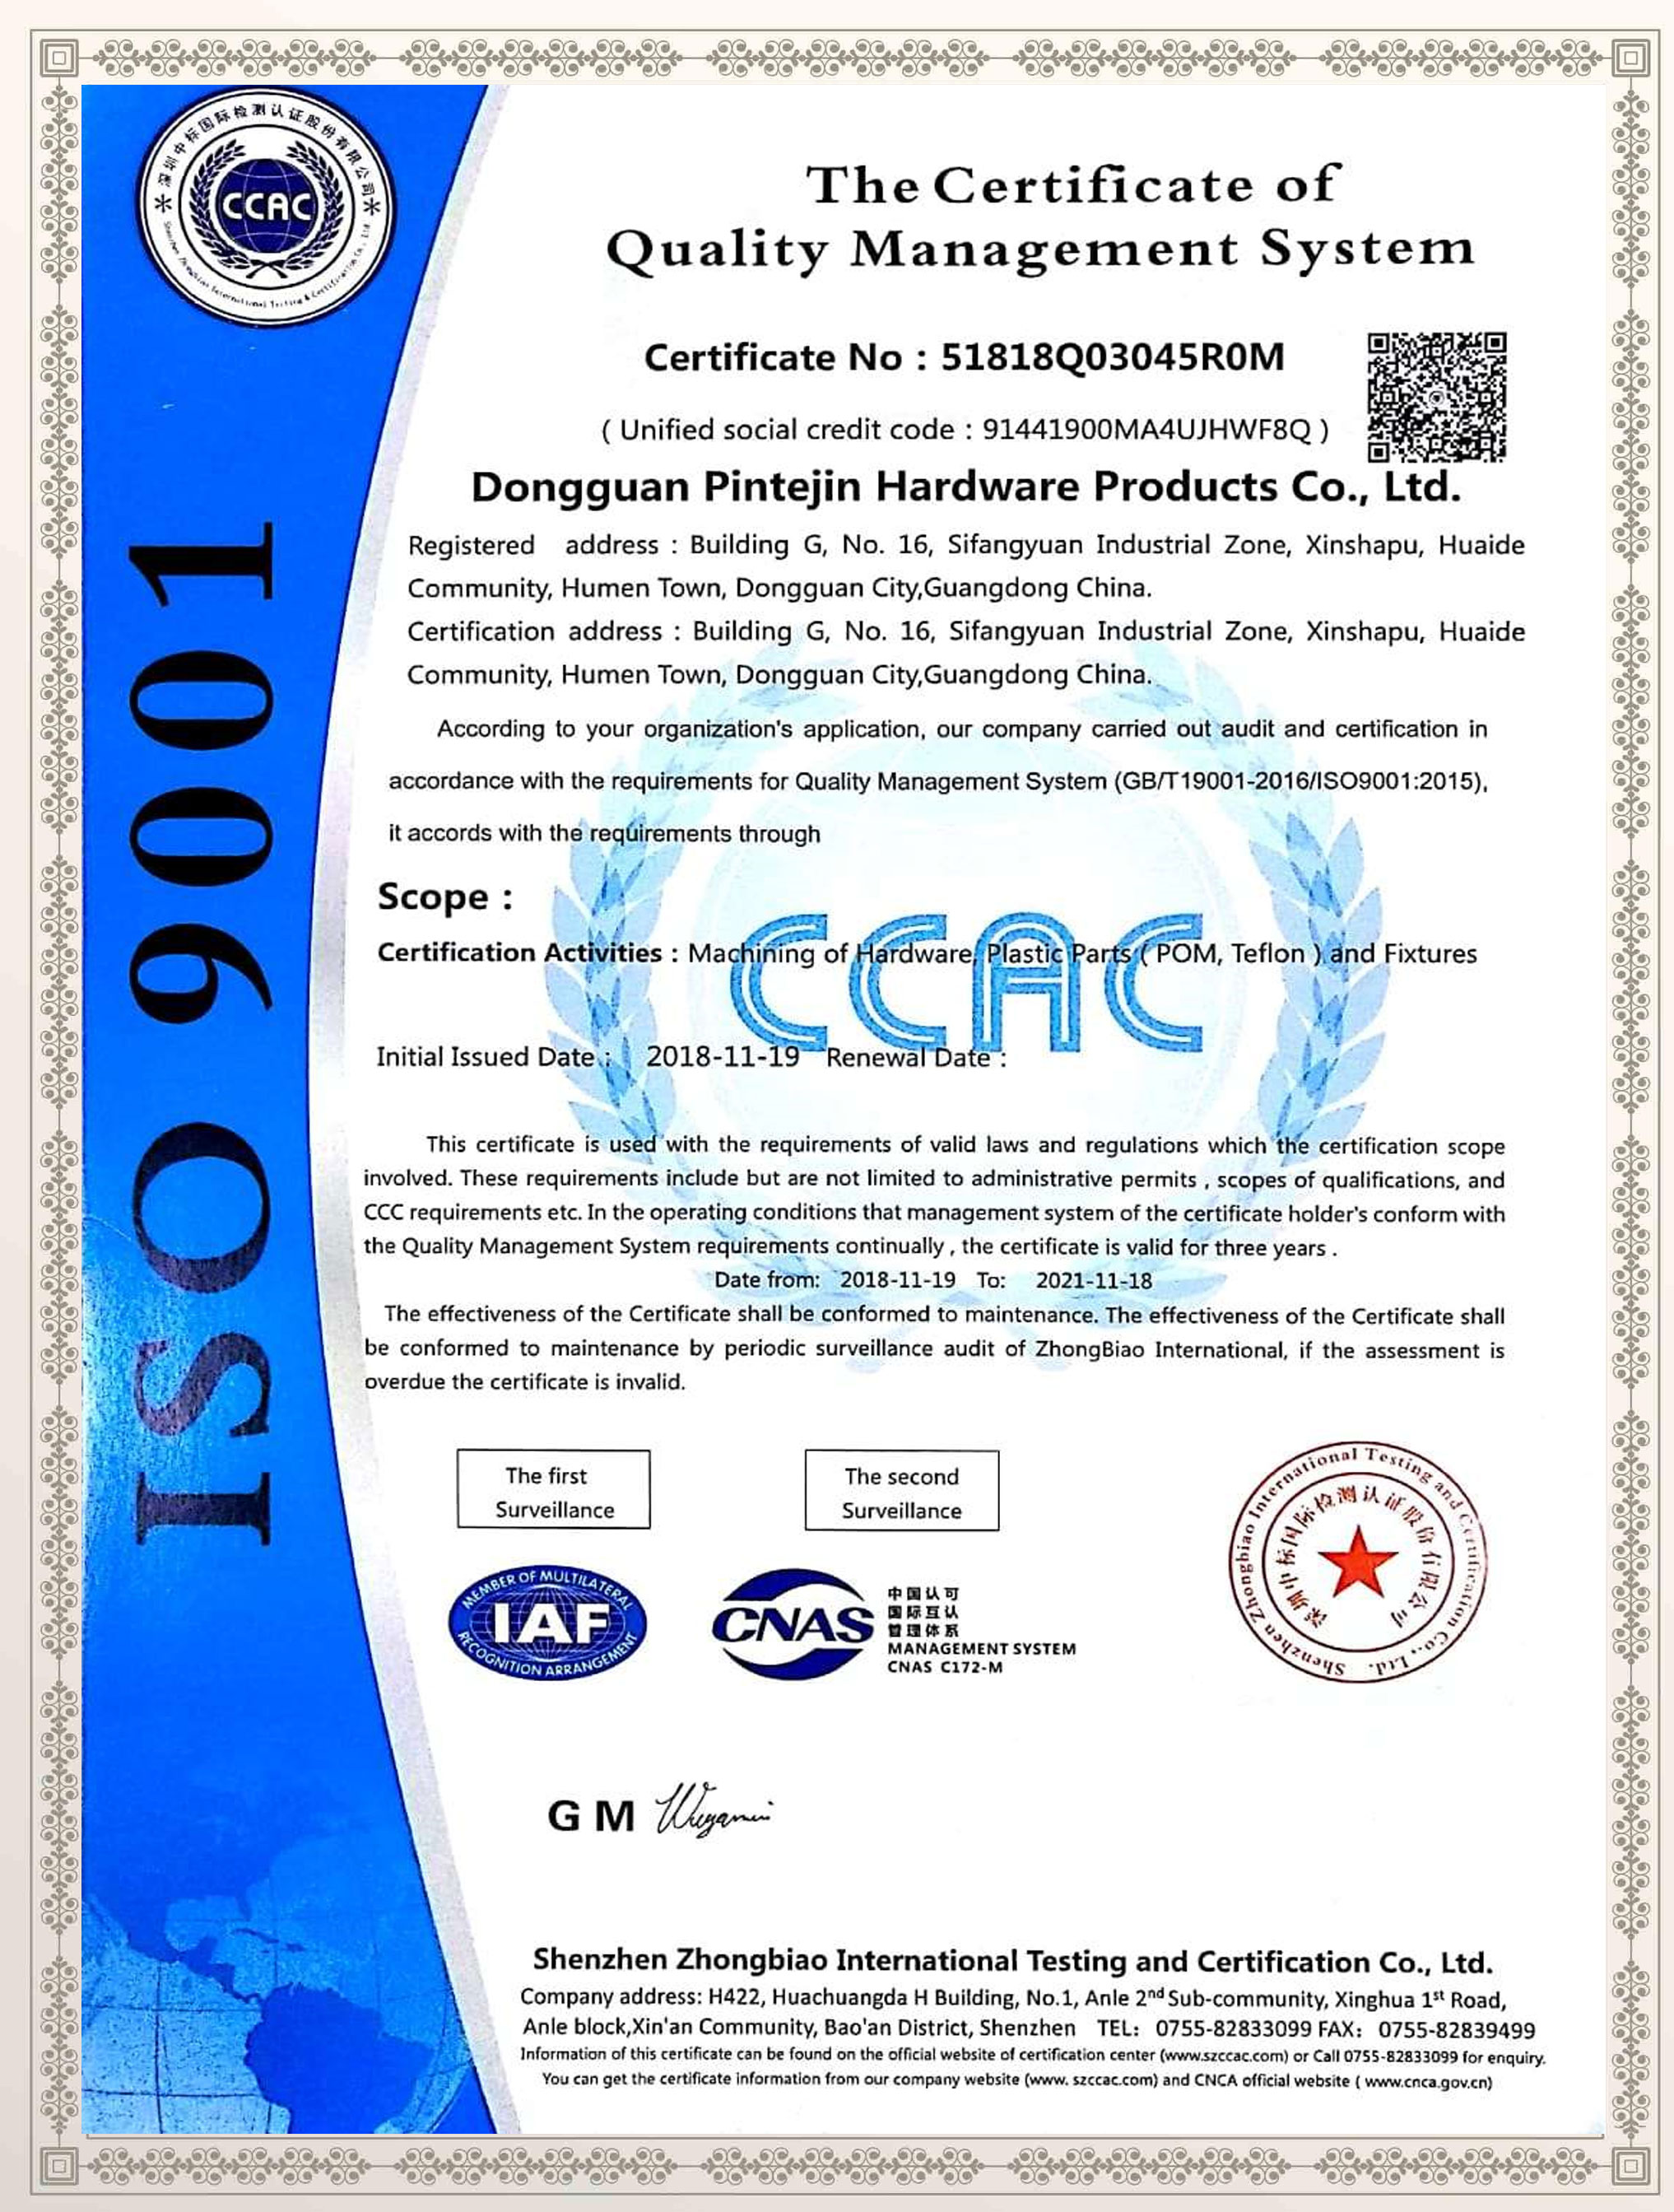 PTJ Prototype Shop ISO9001:2015 Certificate